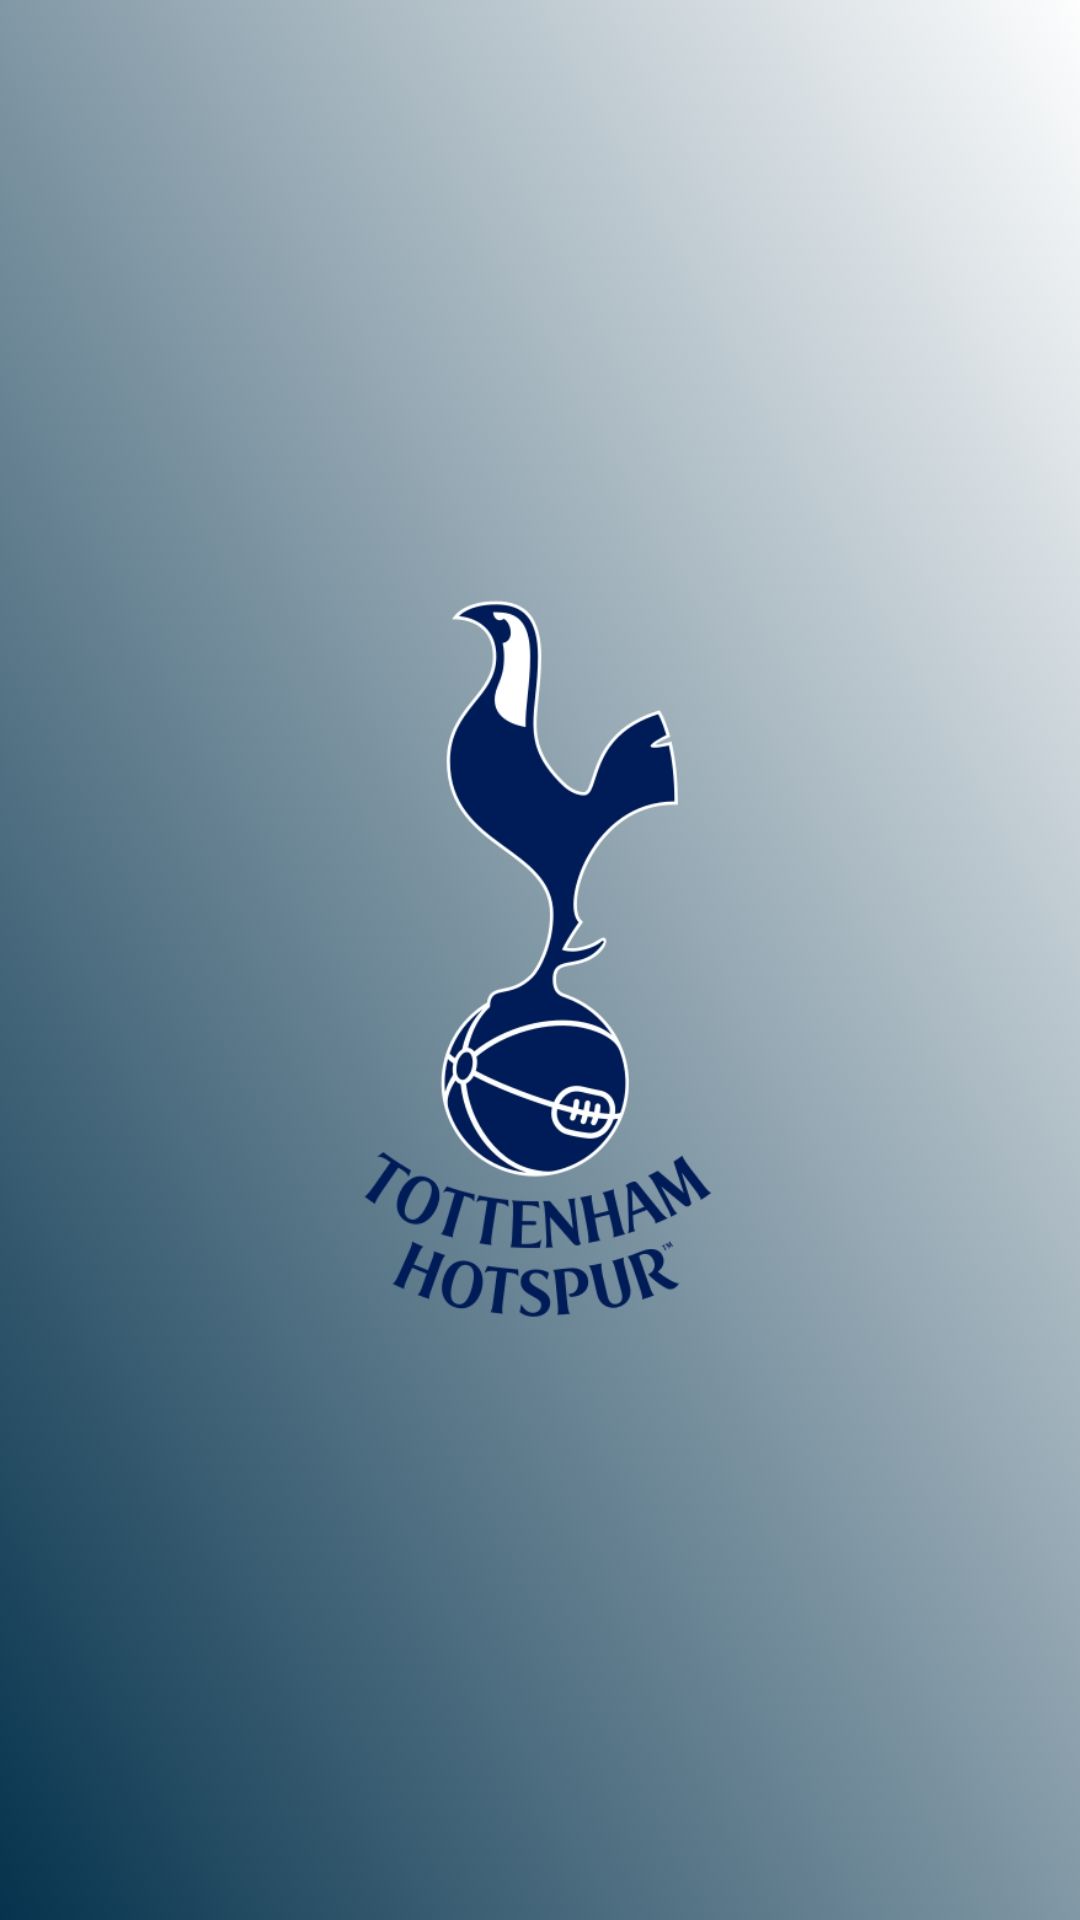 Tottenham Hotspur. Tottenham hotspur wallpaper, Tottenham wallpaper, Tottenham hotspur